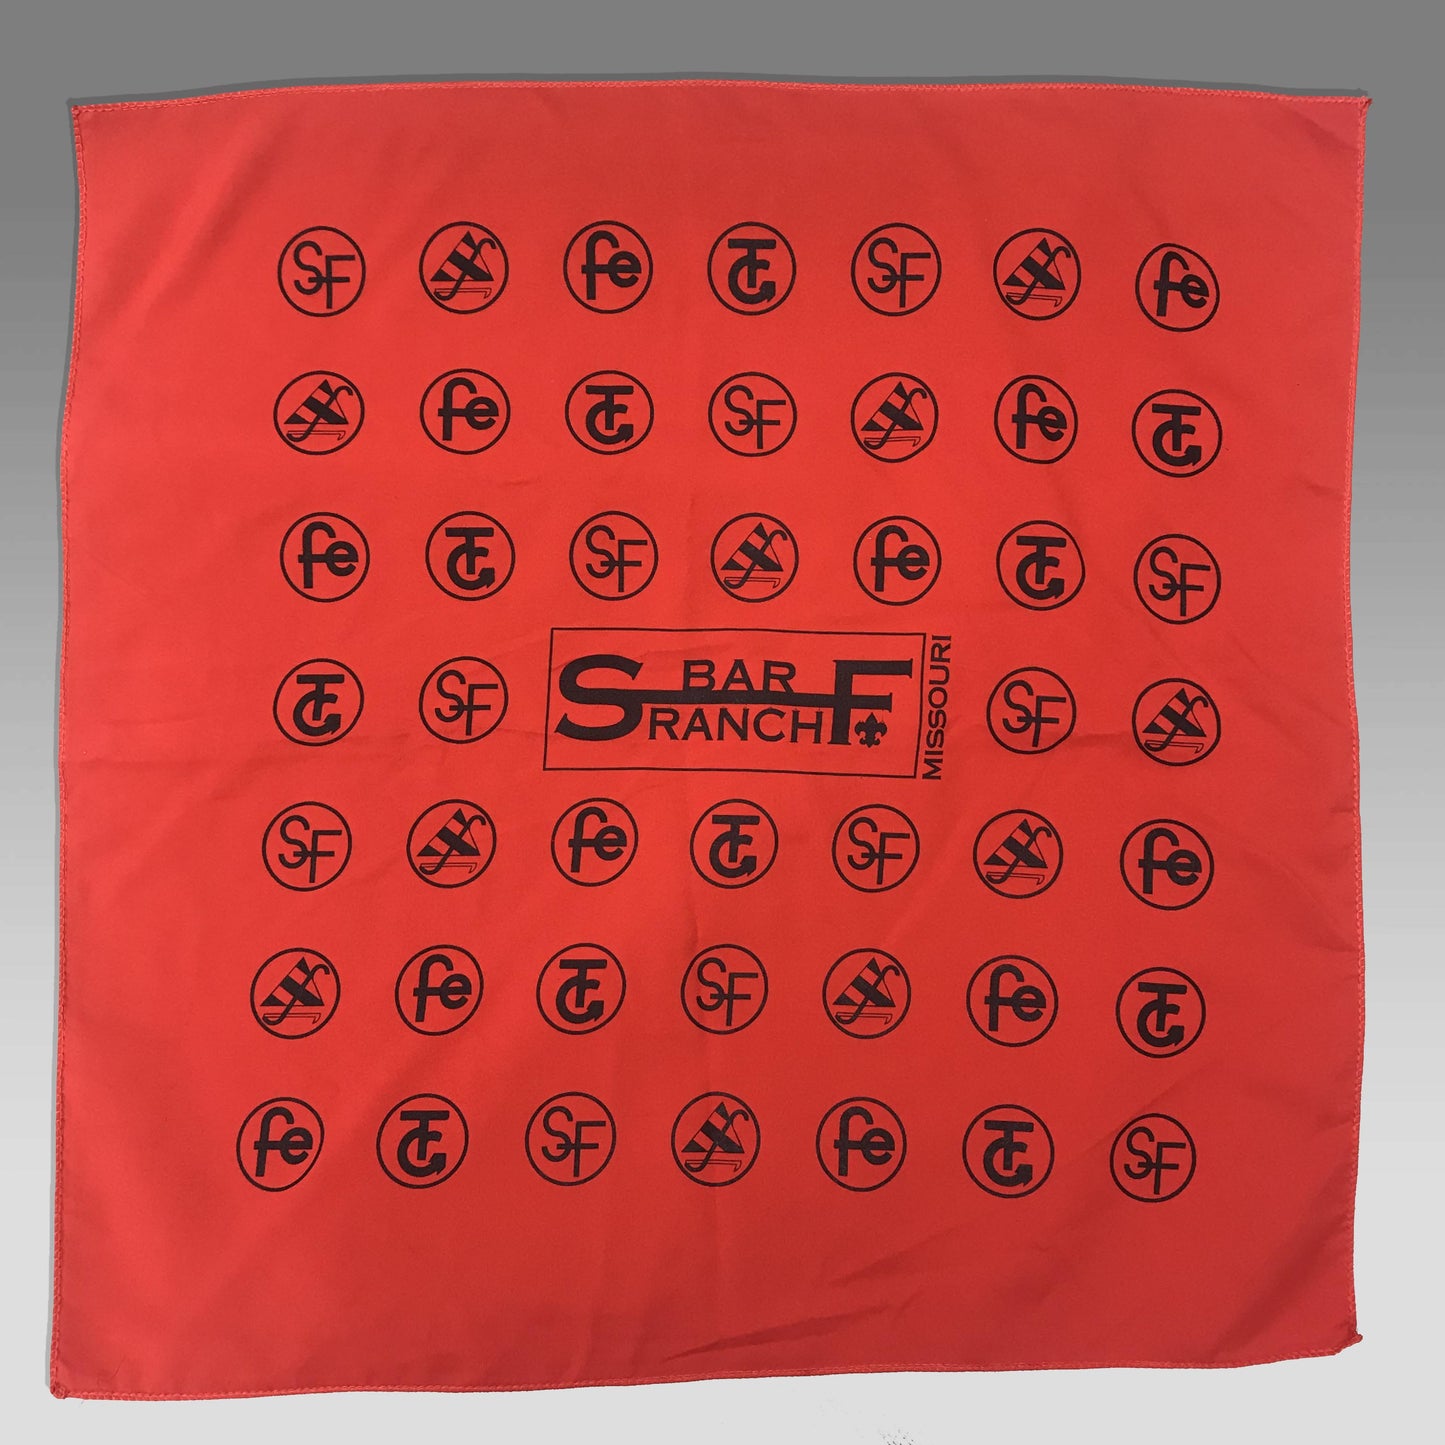 Bandana S Bar F camp logos red